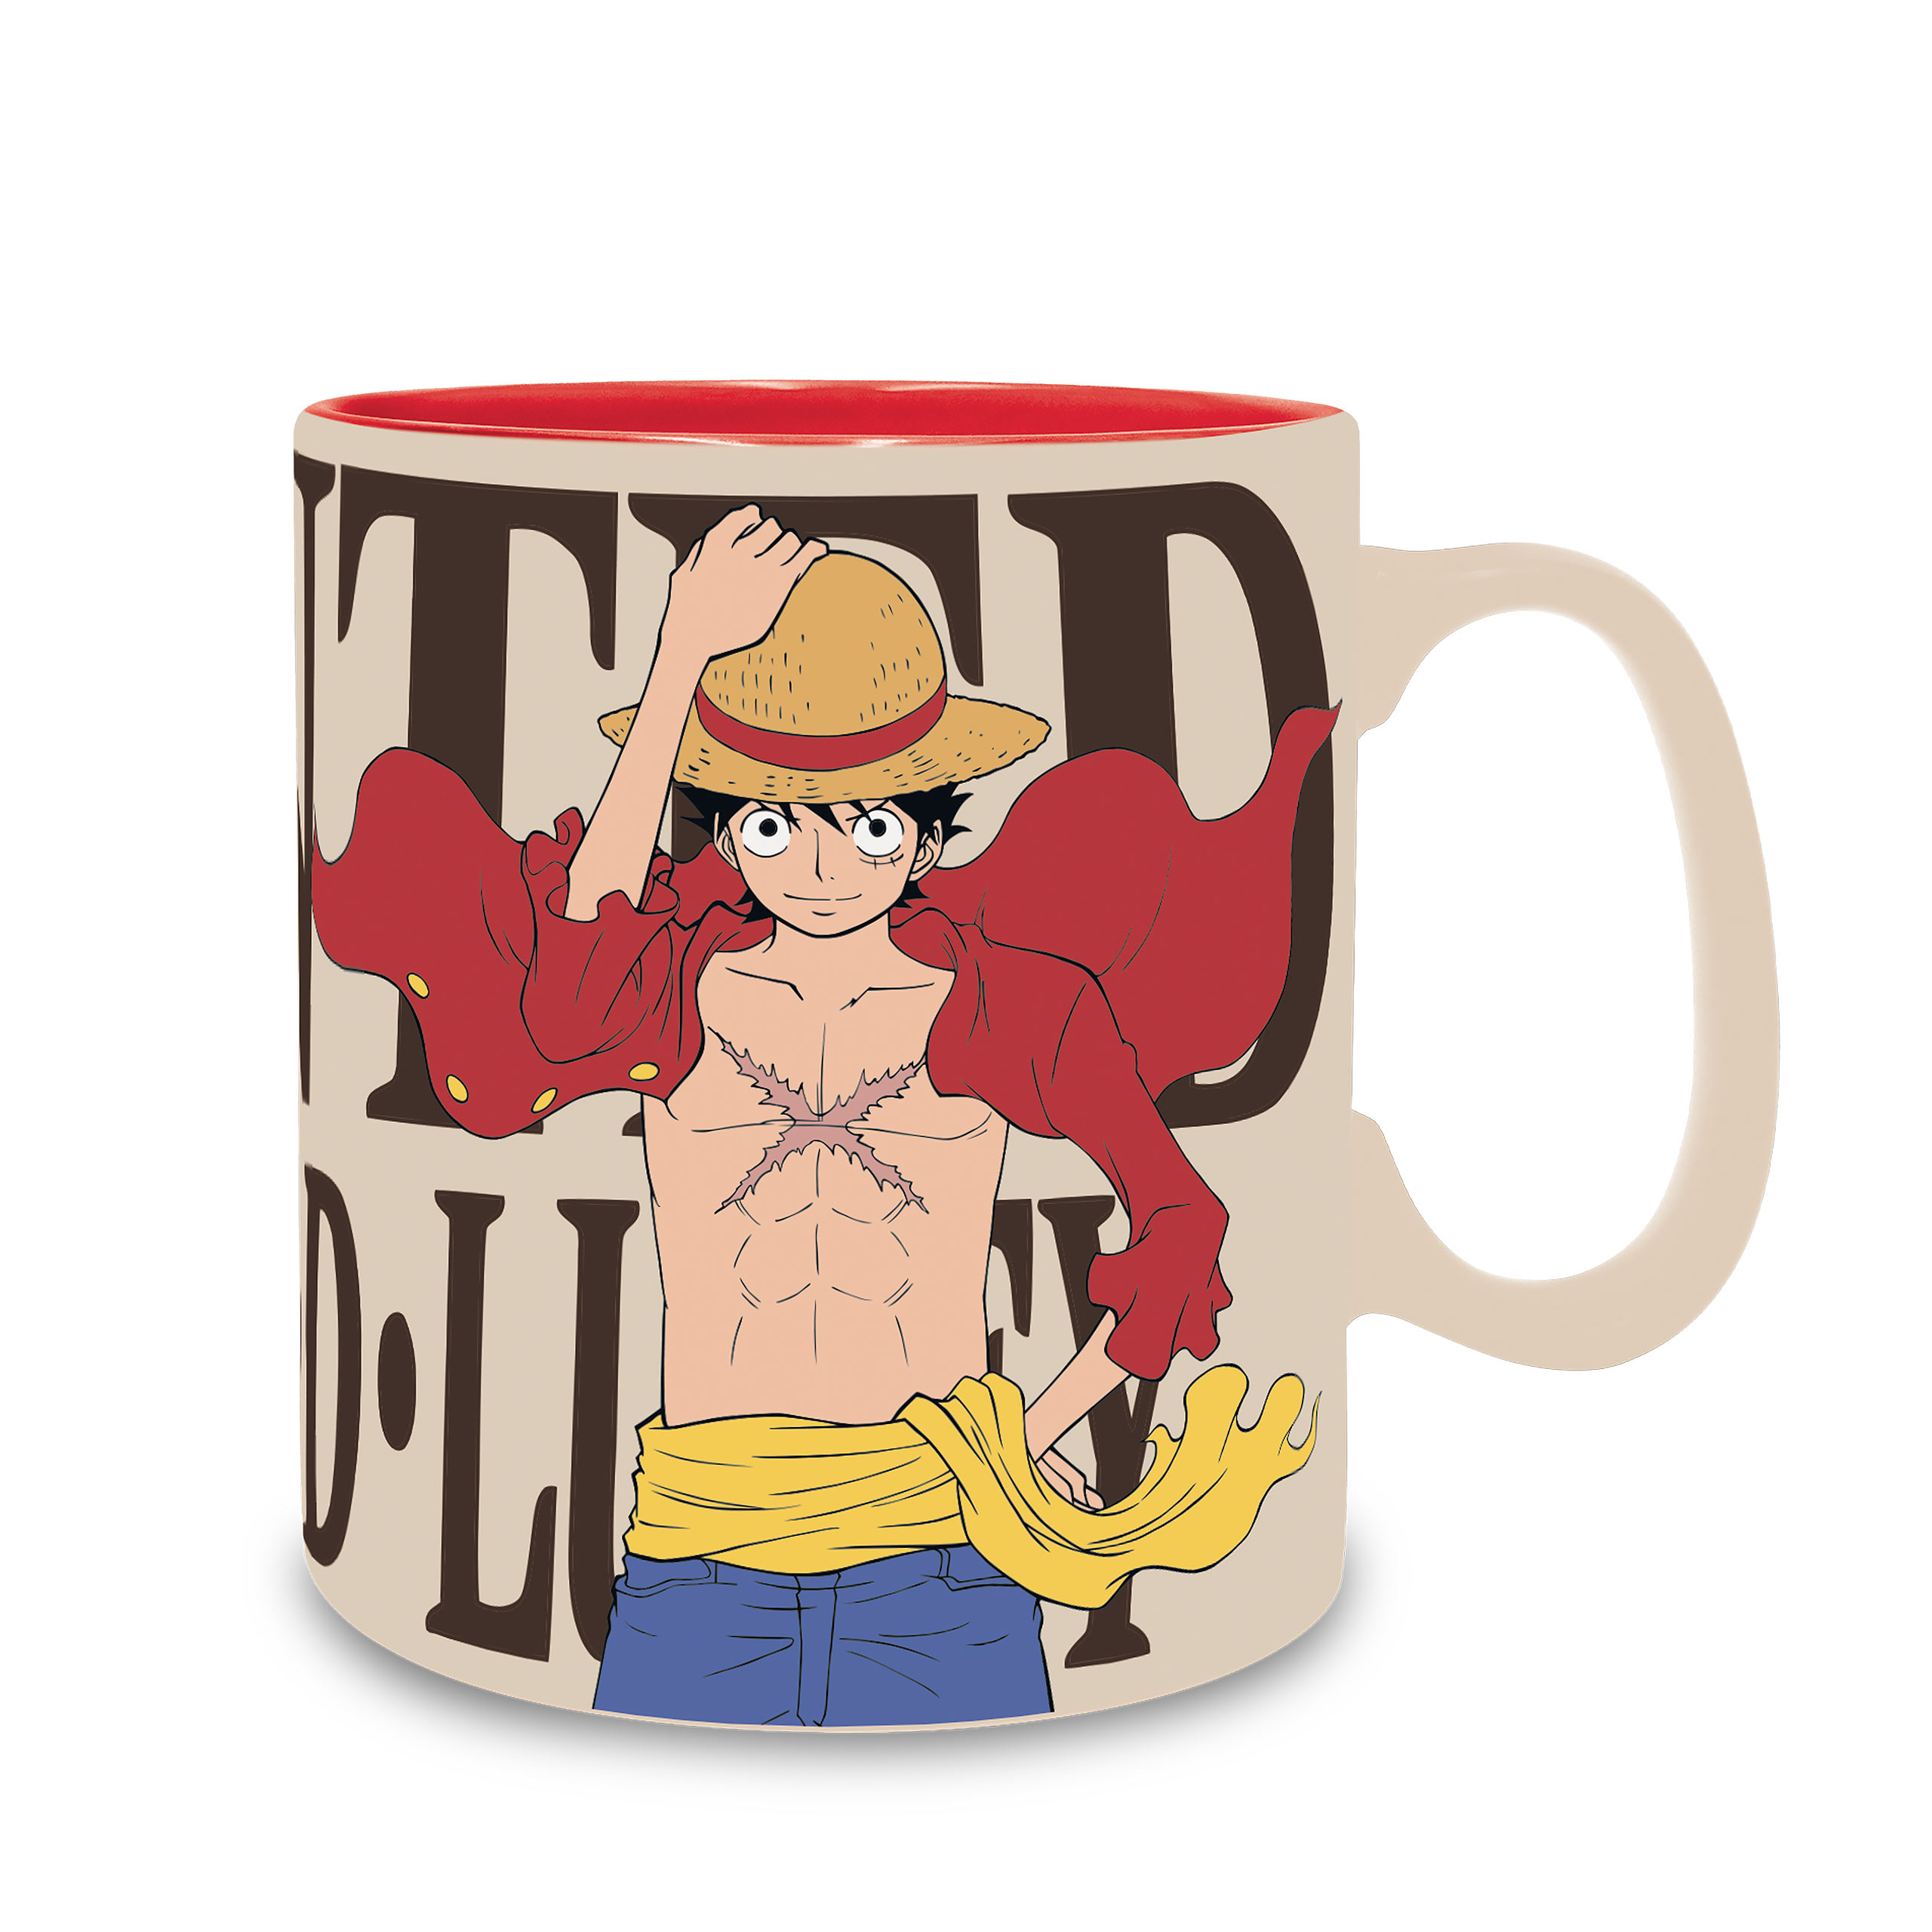 One Piece - Wanted Monkey D. Luffy Mug